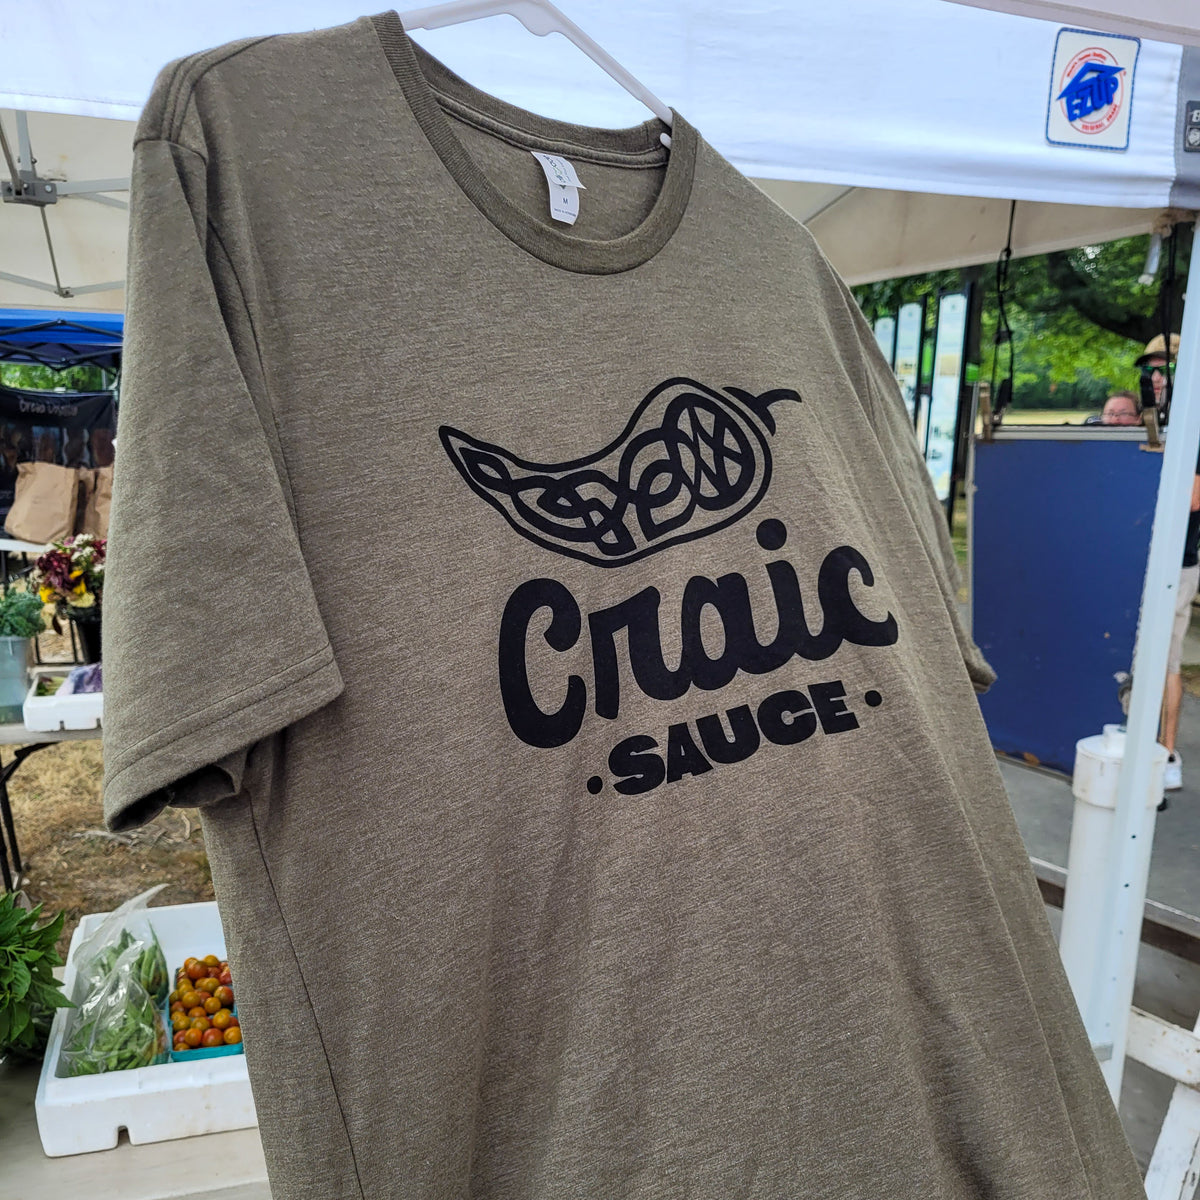 Craic Sauce - What&#39;s the Craic T-Shirt